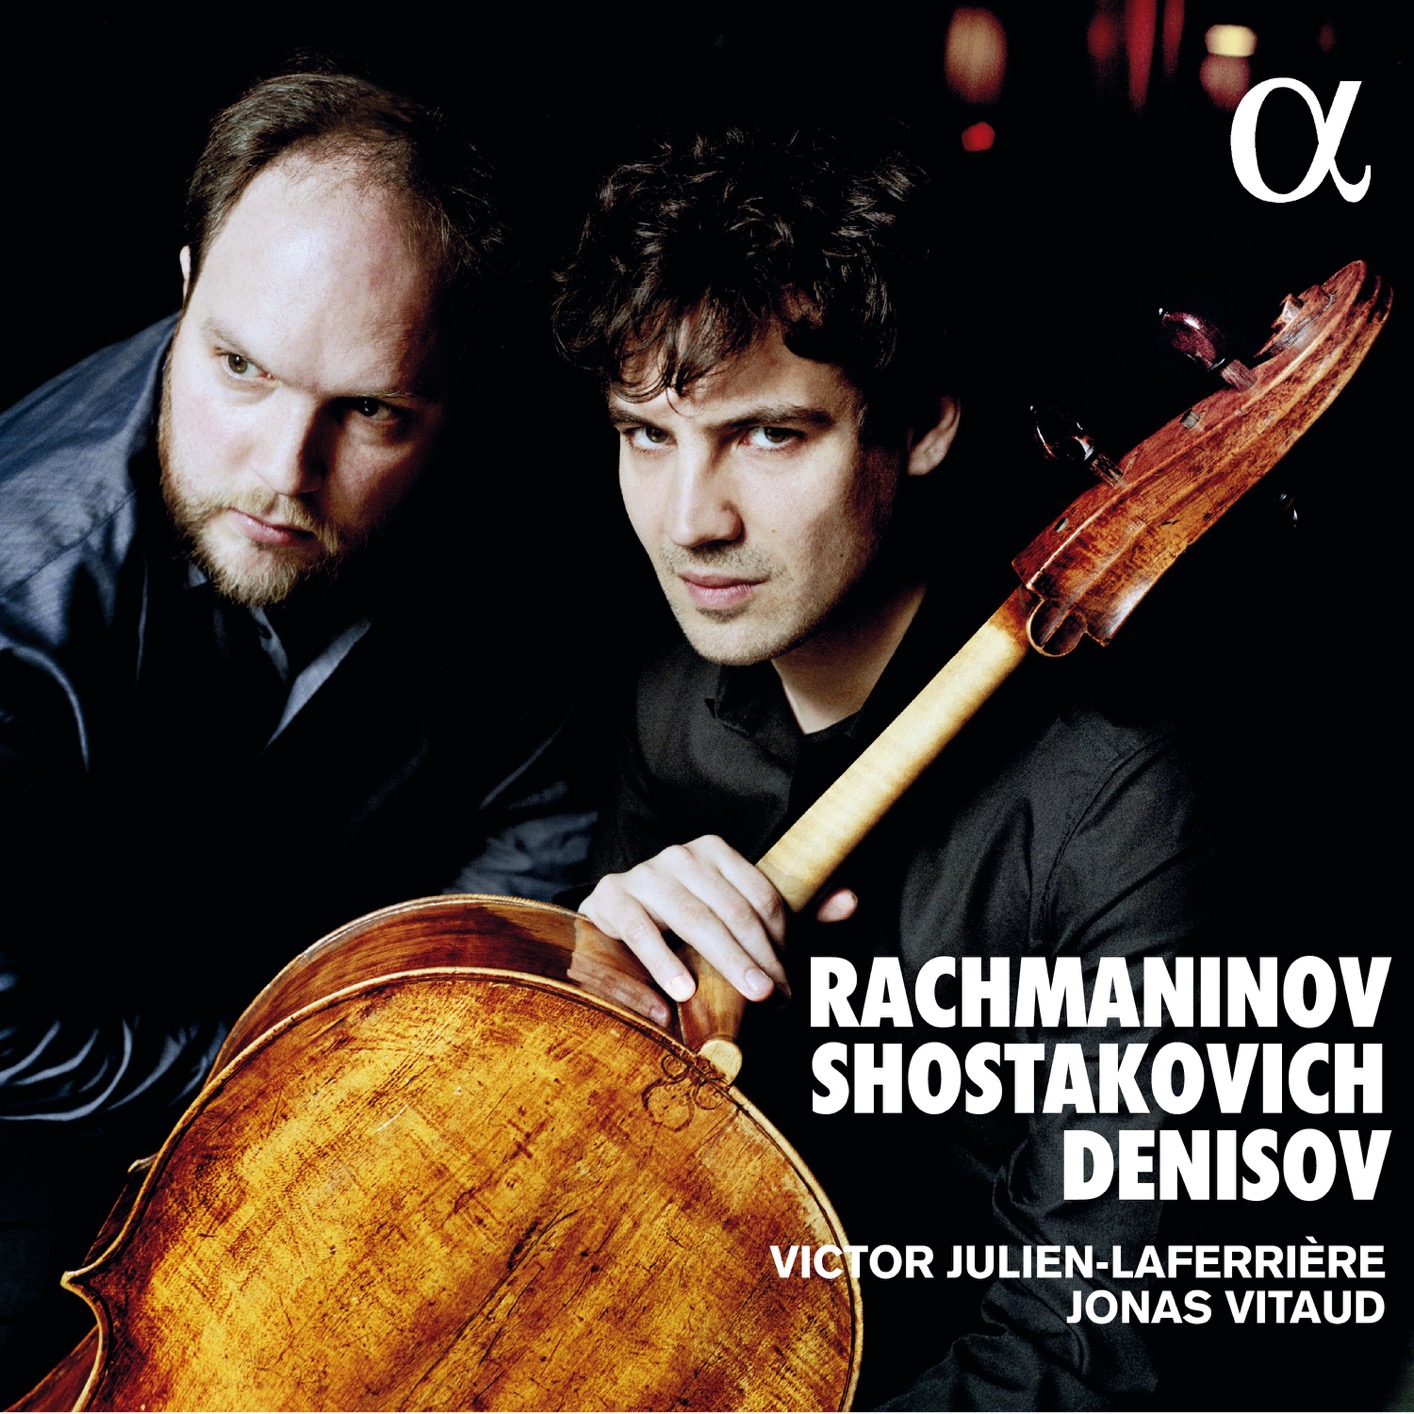 Victor Julien-Laferriere & Jonas Vitaud - Rachmaninov, Shostakovich & Denisov (2019) [FLAC 24bit/192kHz]